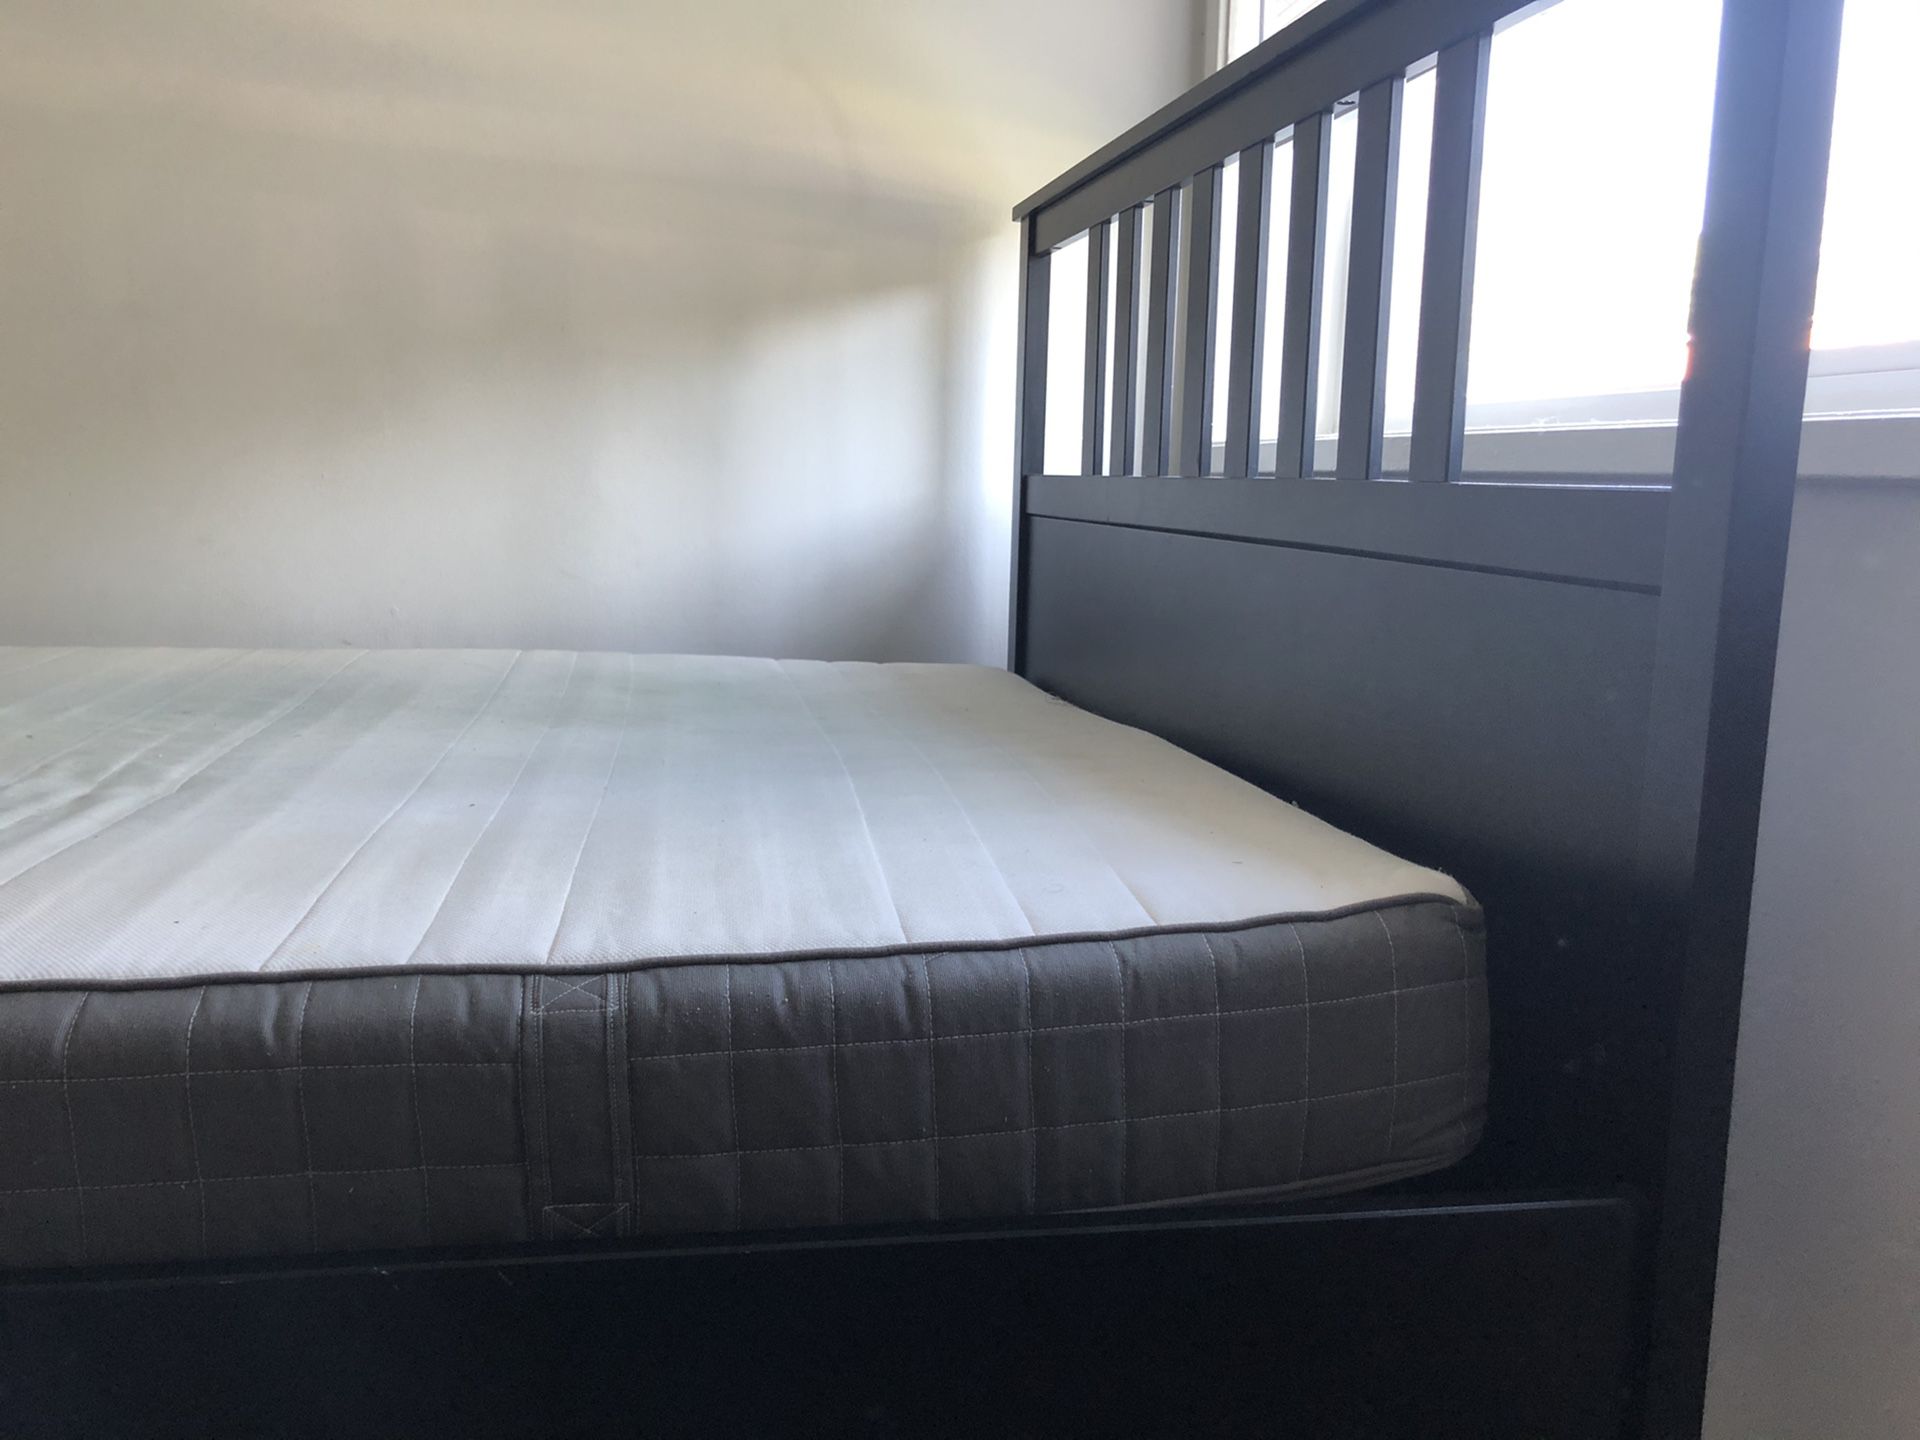 Full size bed frame + mattress